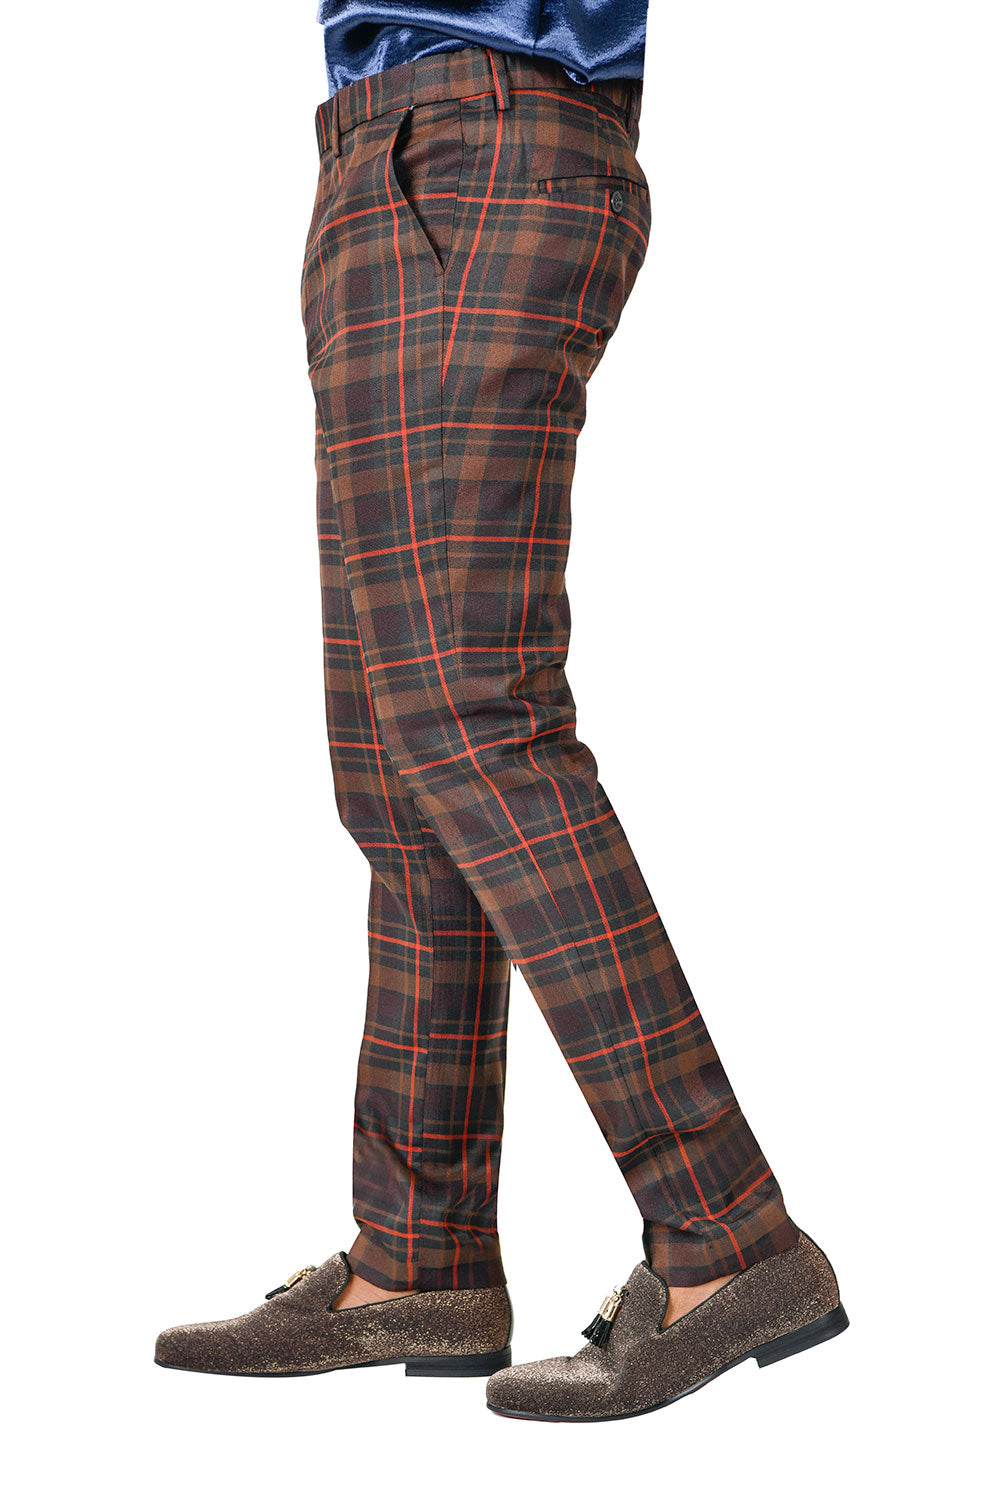 BARABAS Men's Checkered Plaid Brown Orange Chino Pants CP52 